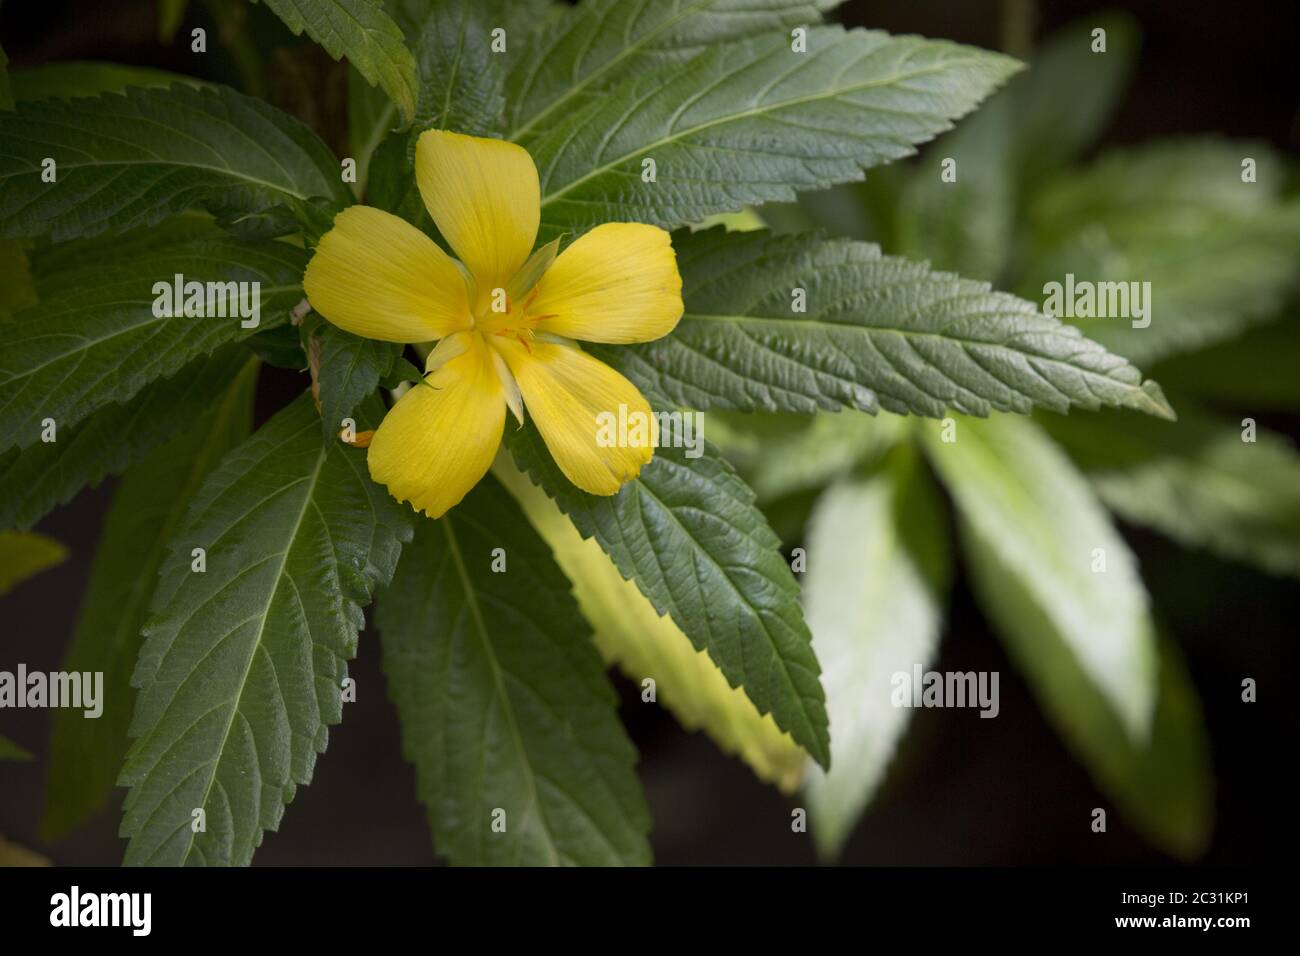 ramgoat dashalong or yellow alder (Turnera ulmifolia) in the botanical garden Stock Photo